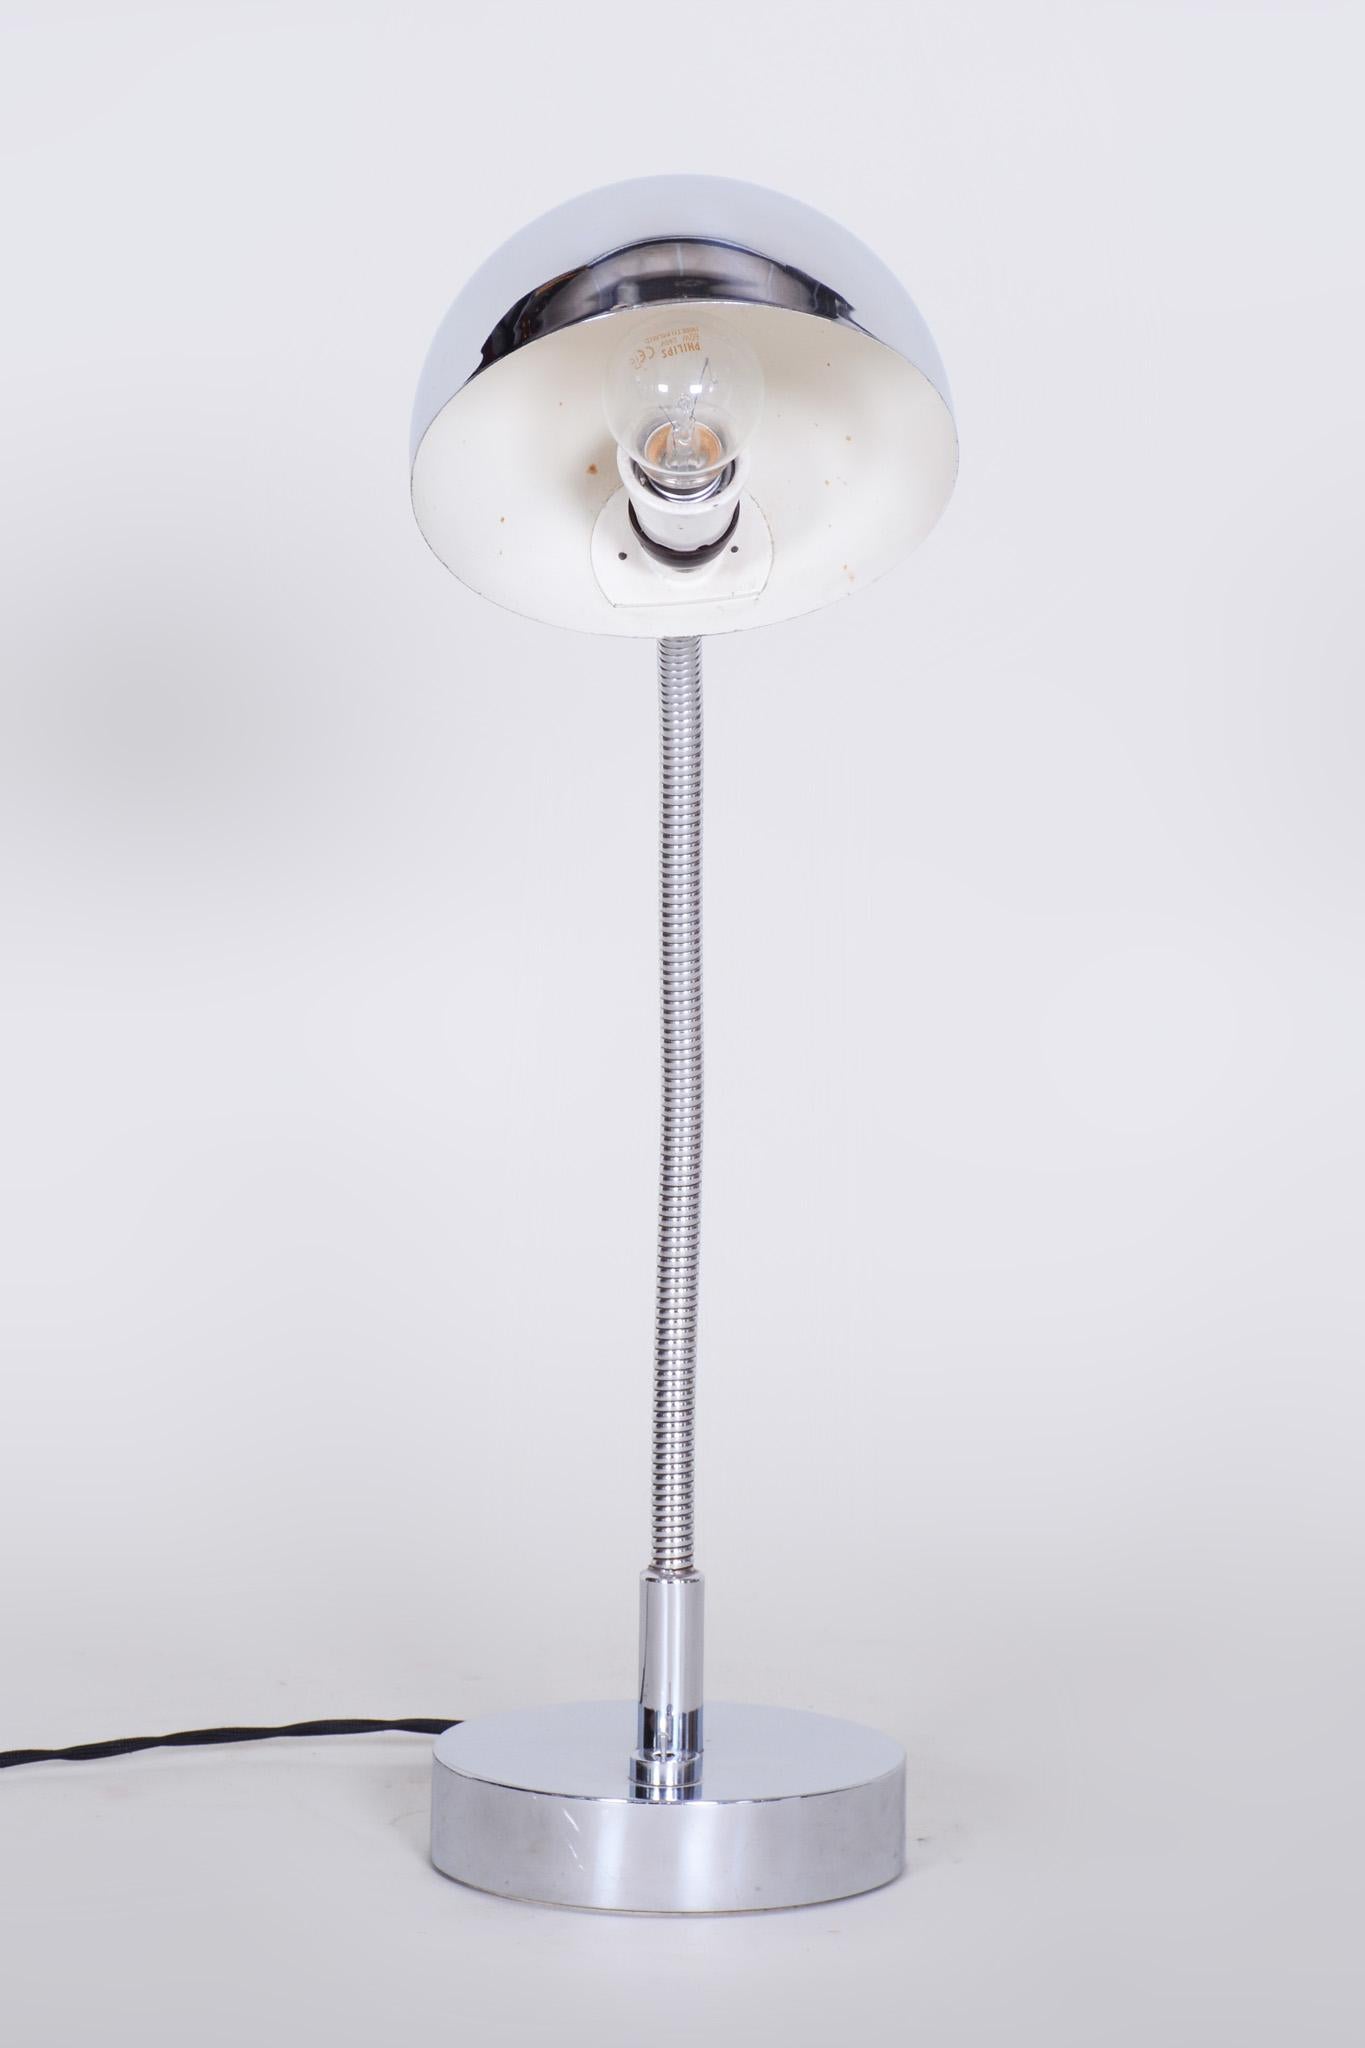 Chrome Bauhaus Table Lamp, Newly Electrified, Designer M. Prokop, Czechia, 1920s For Sale 4